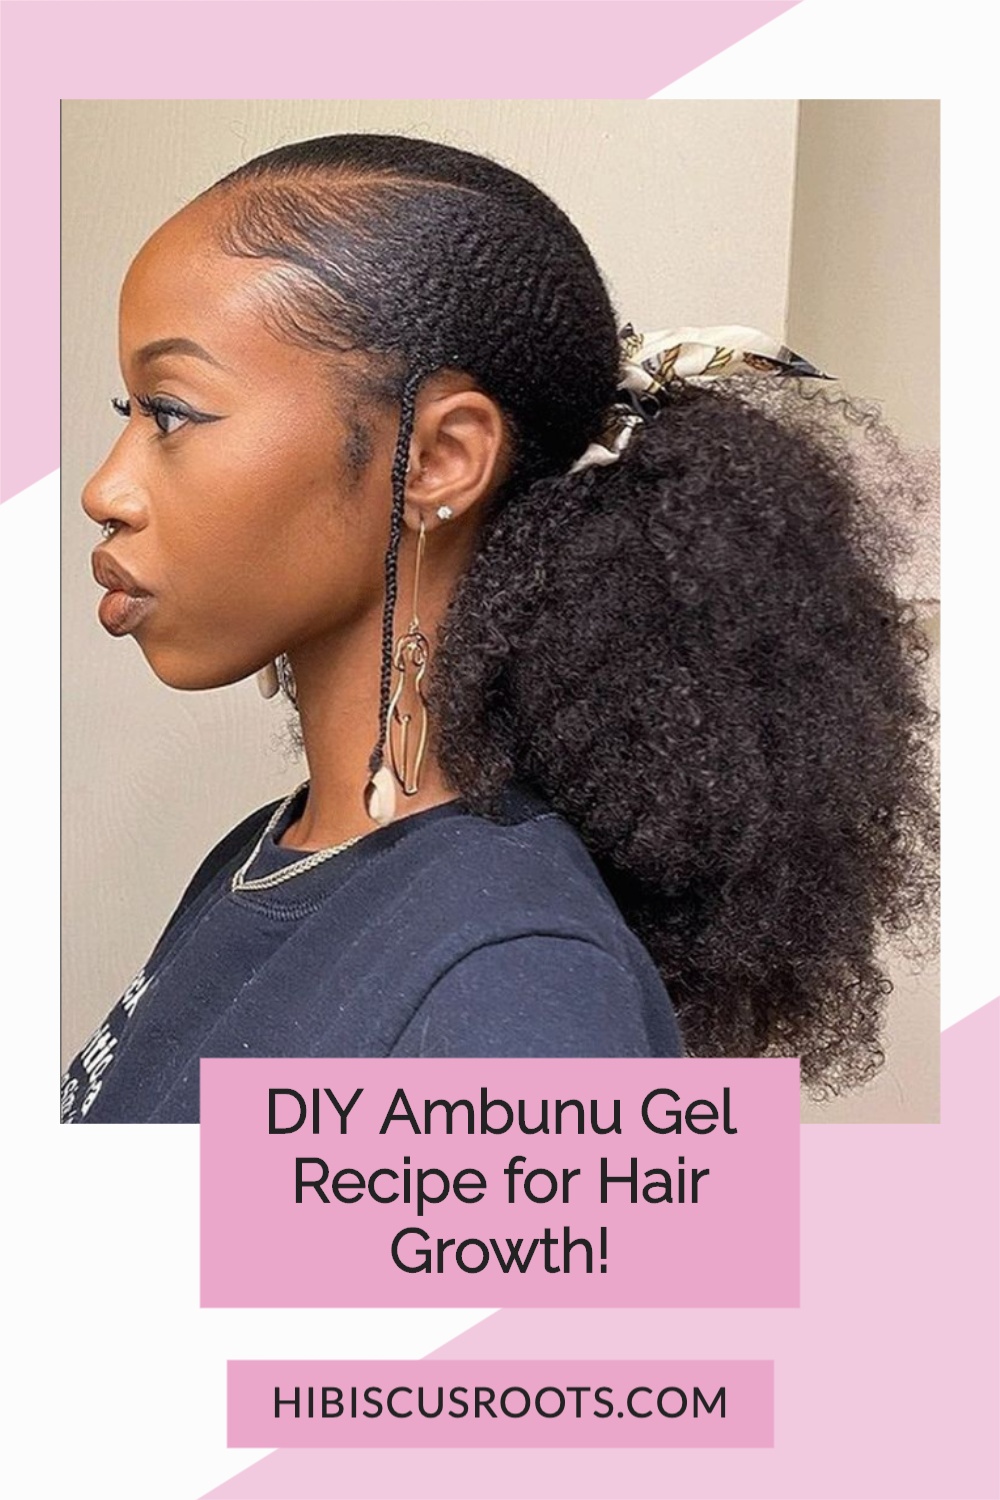 Benefits of Ambunu Powder for Hair Growth